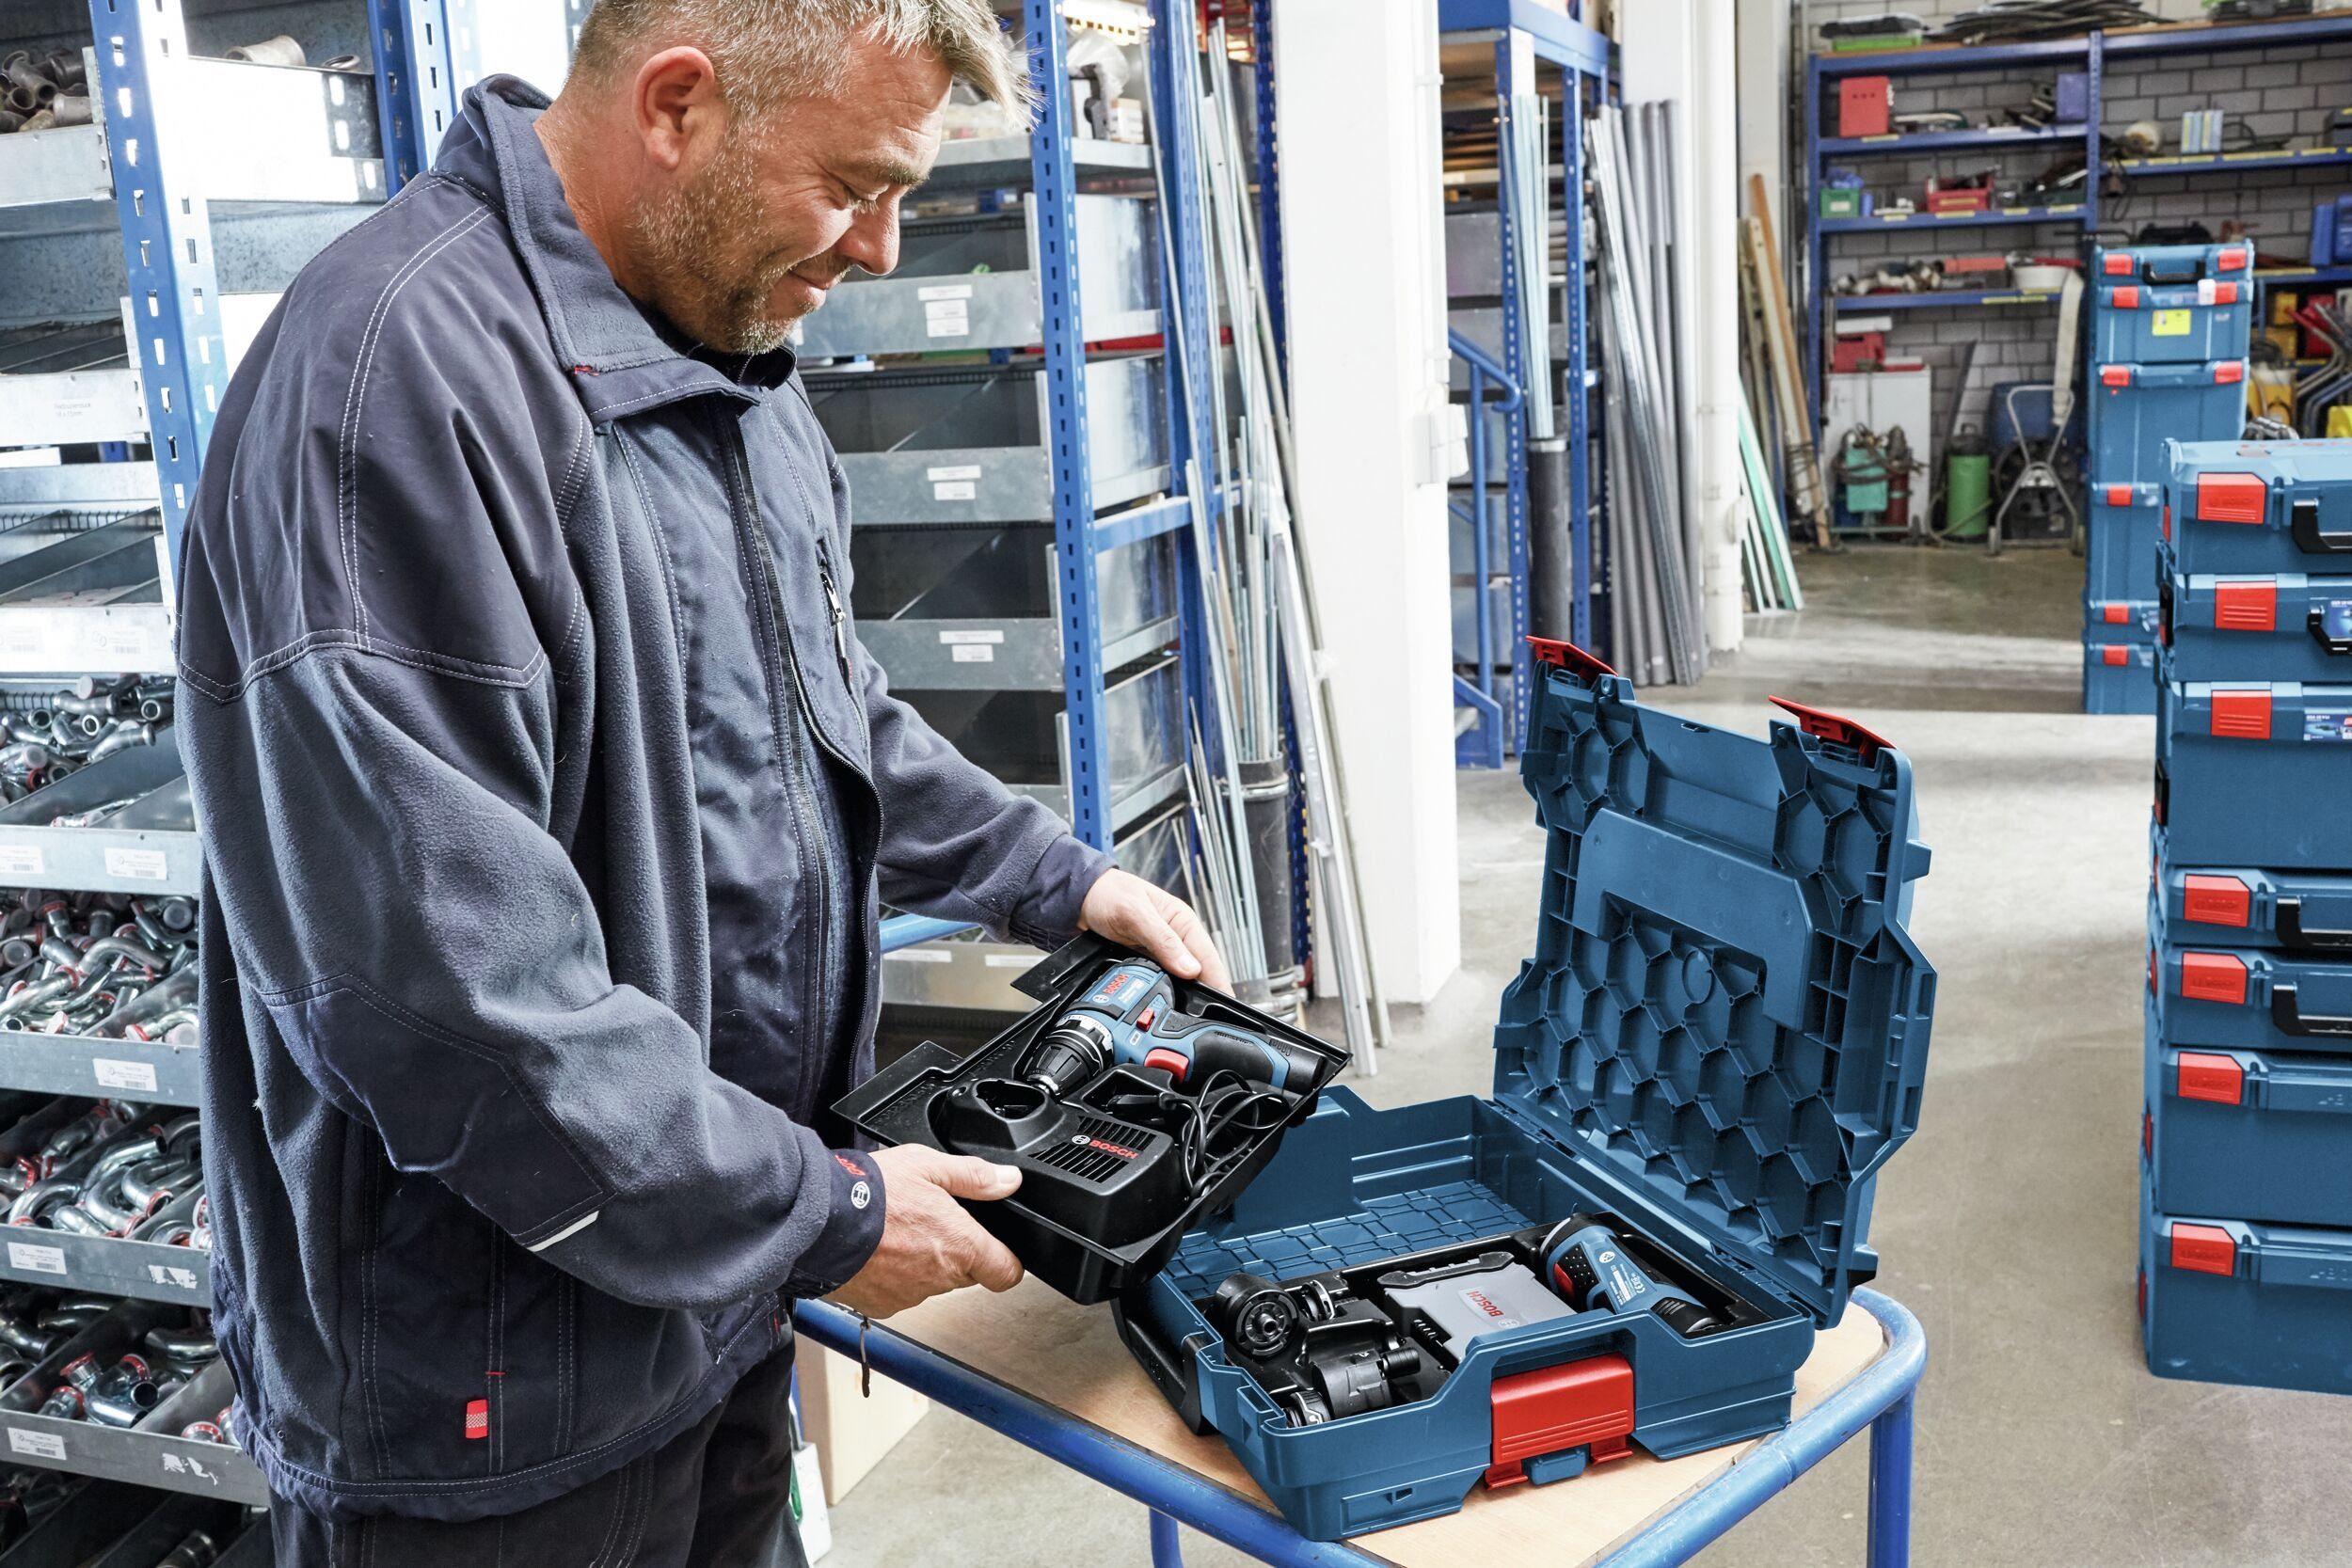 Professional 374, Bosch Professional Werkzeugkoffer Koffersystem L-BOXX